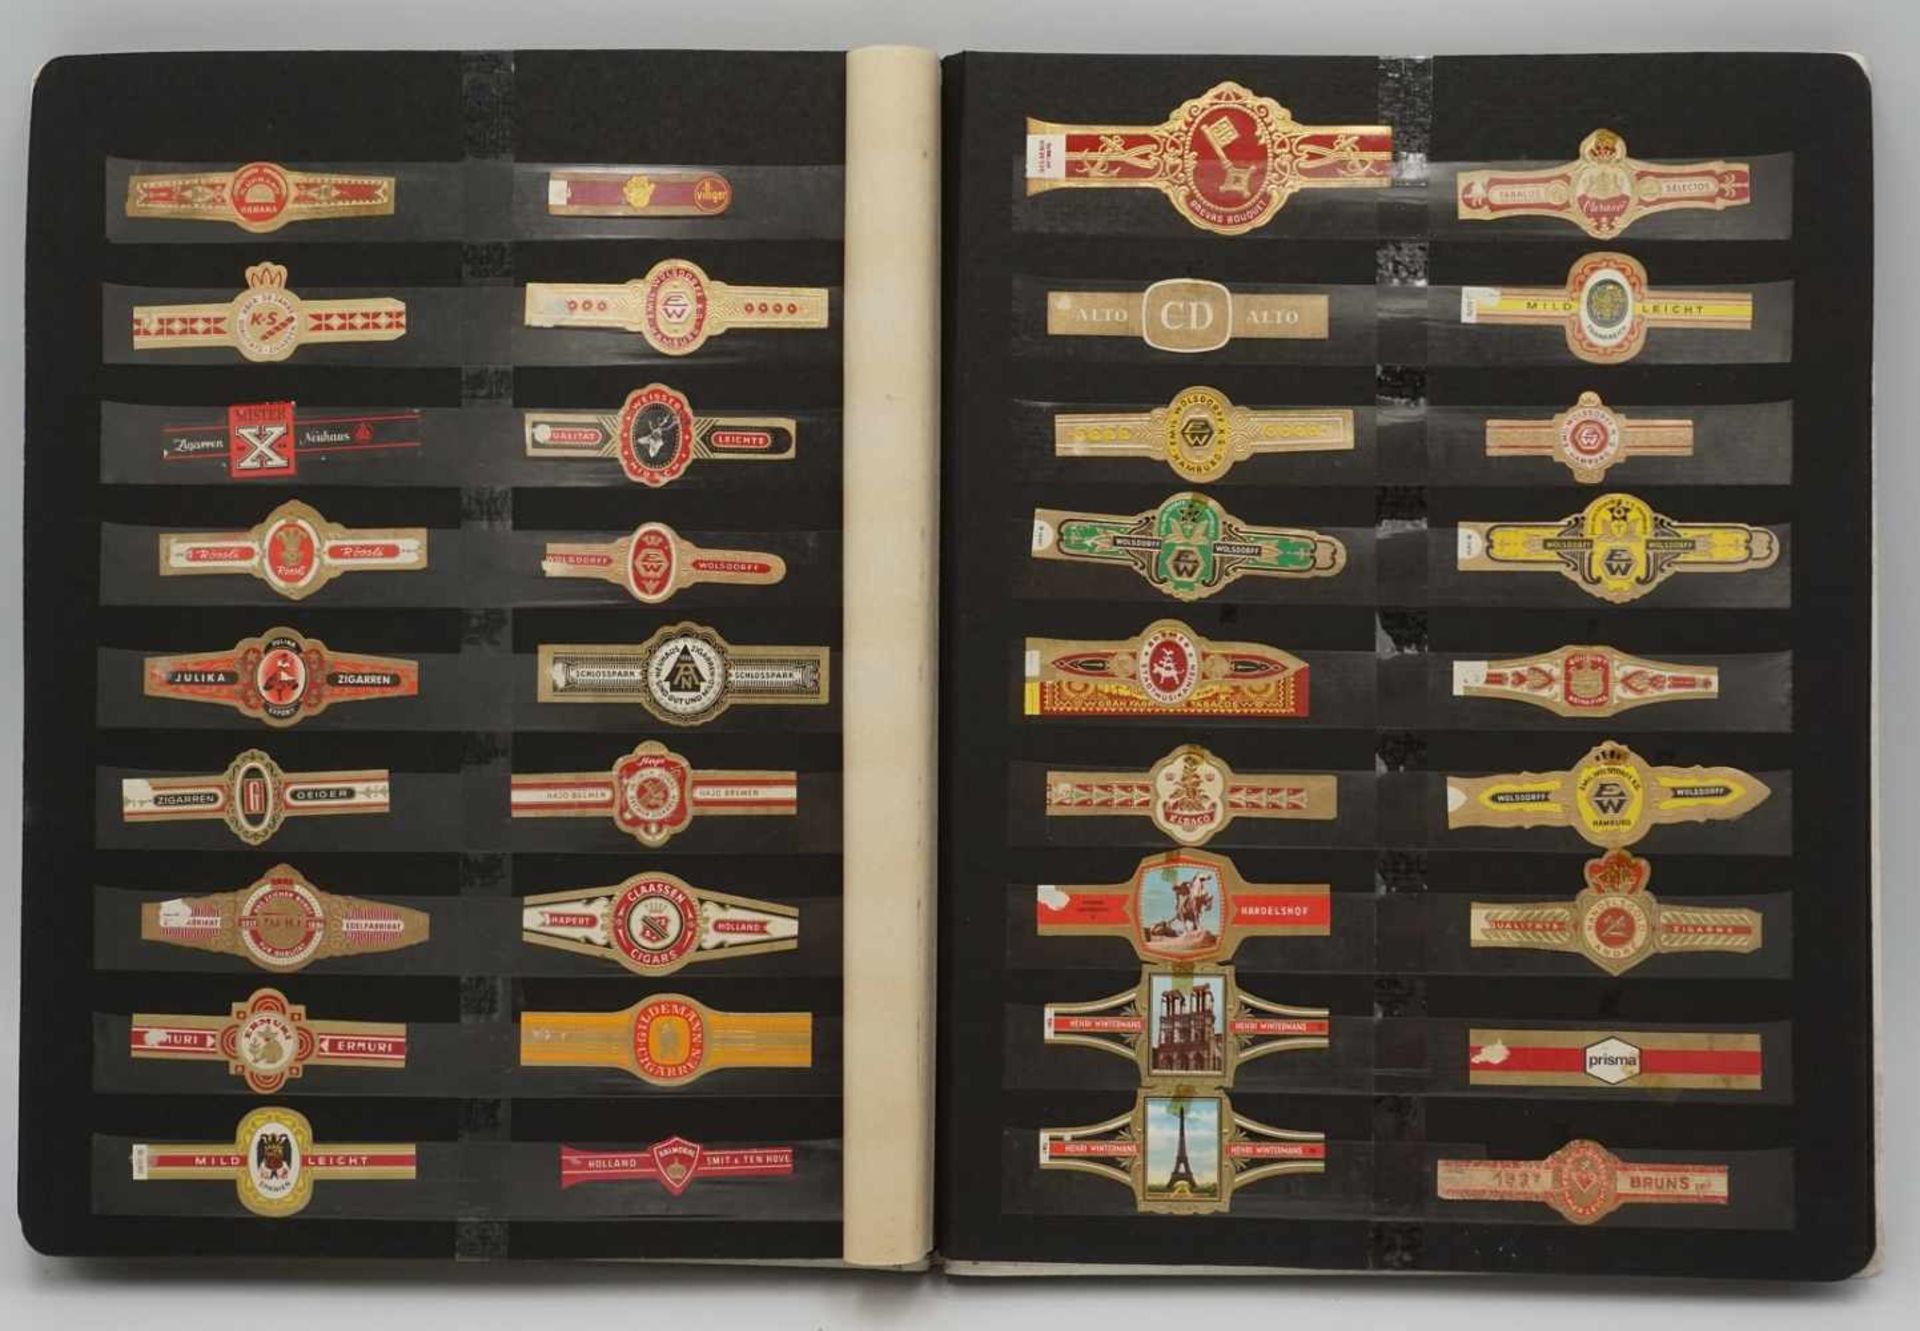 Ca. 900 Zigarren Bauchbindenlose eingelegt in 2 Steckalben, u. a. Handelshof, Flor Fina, Rössli, - Image 2 of 2